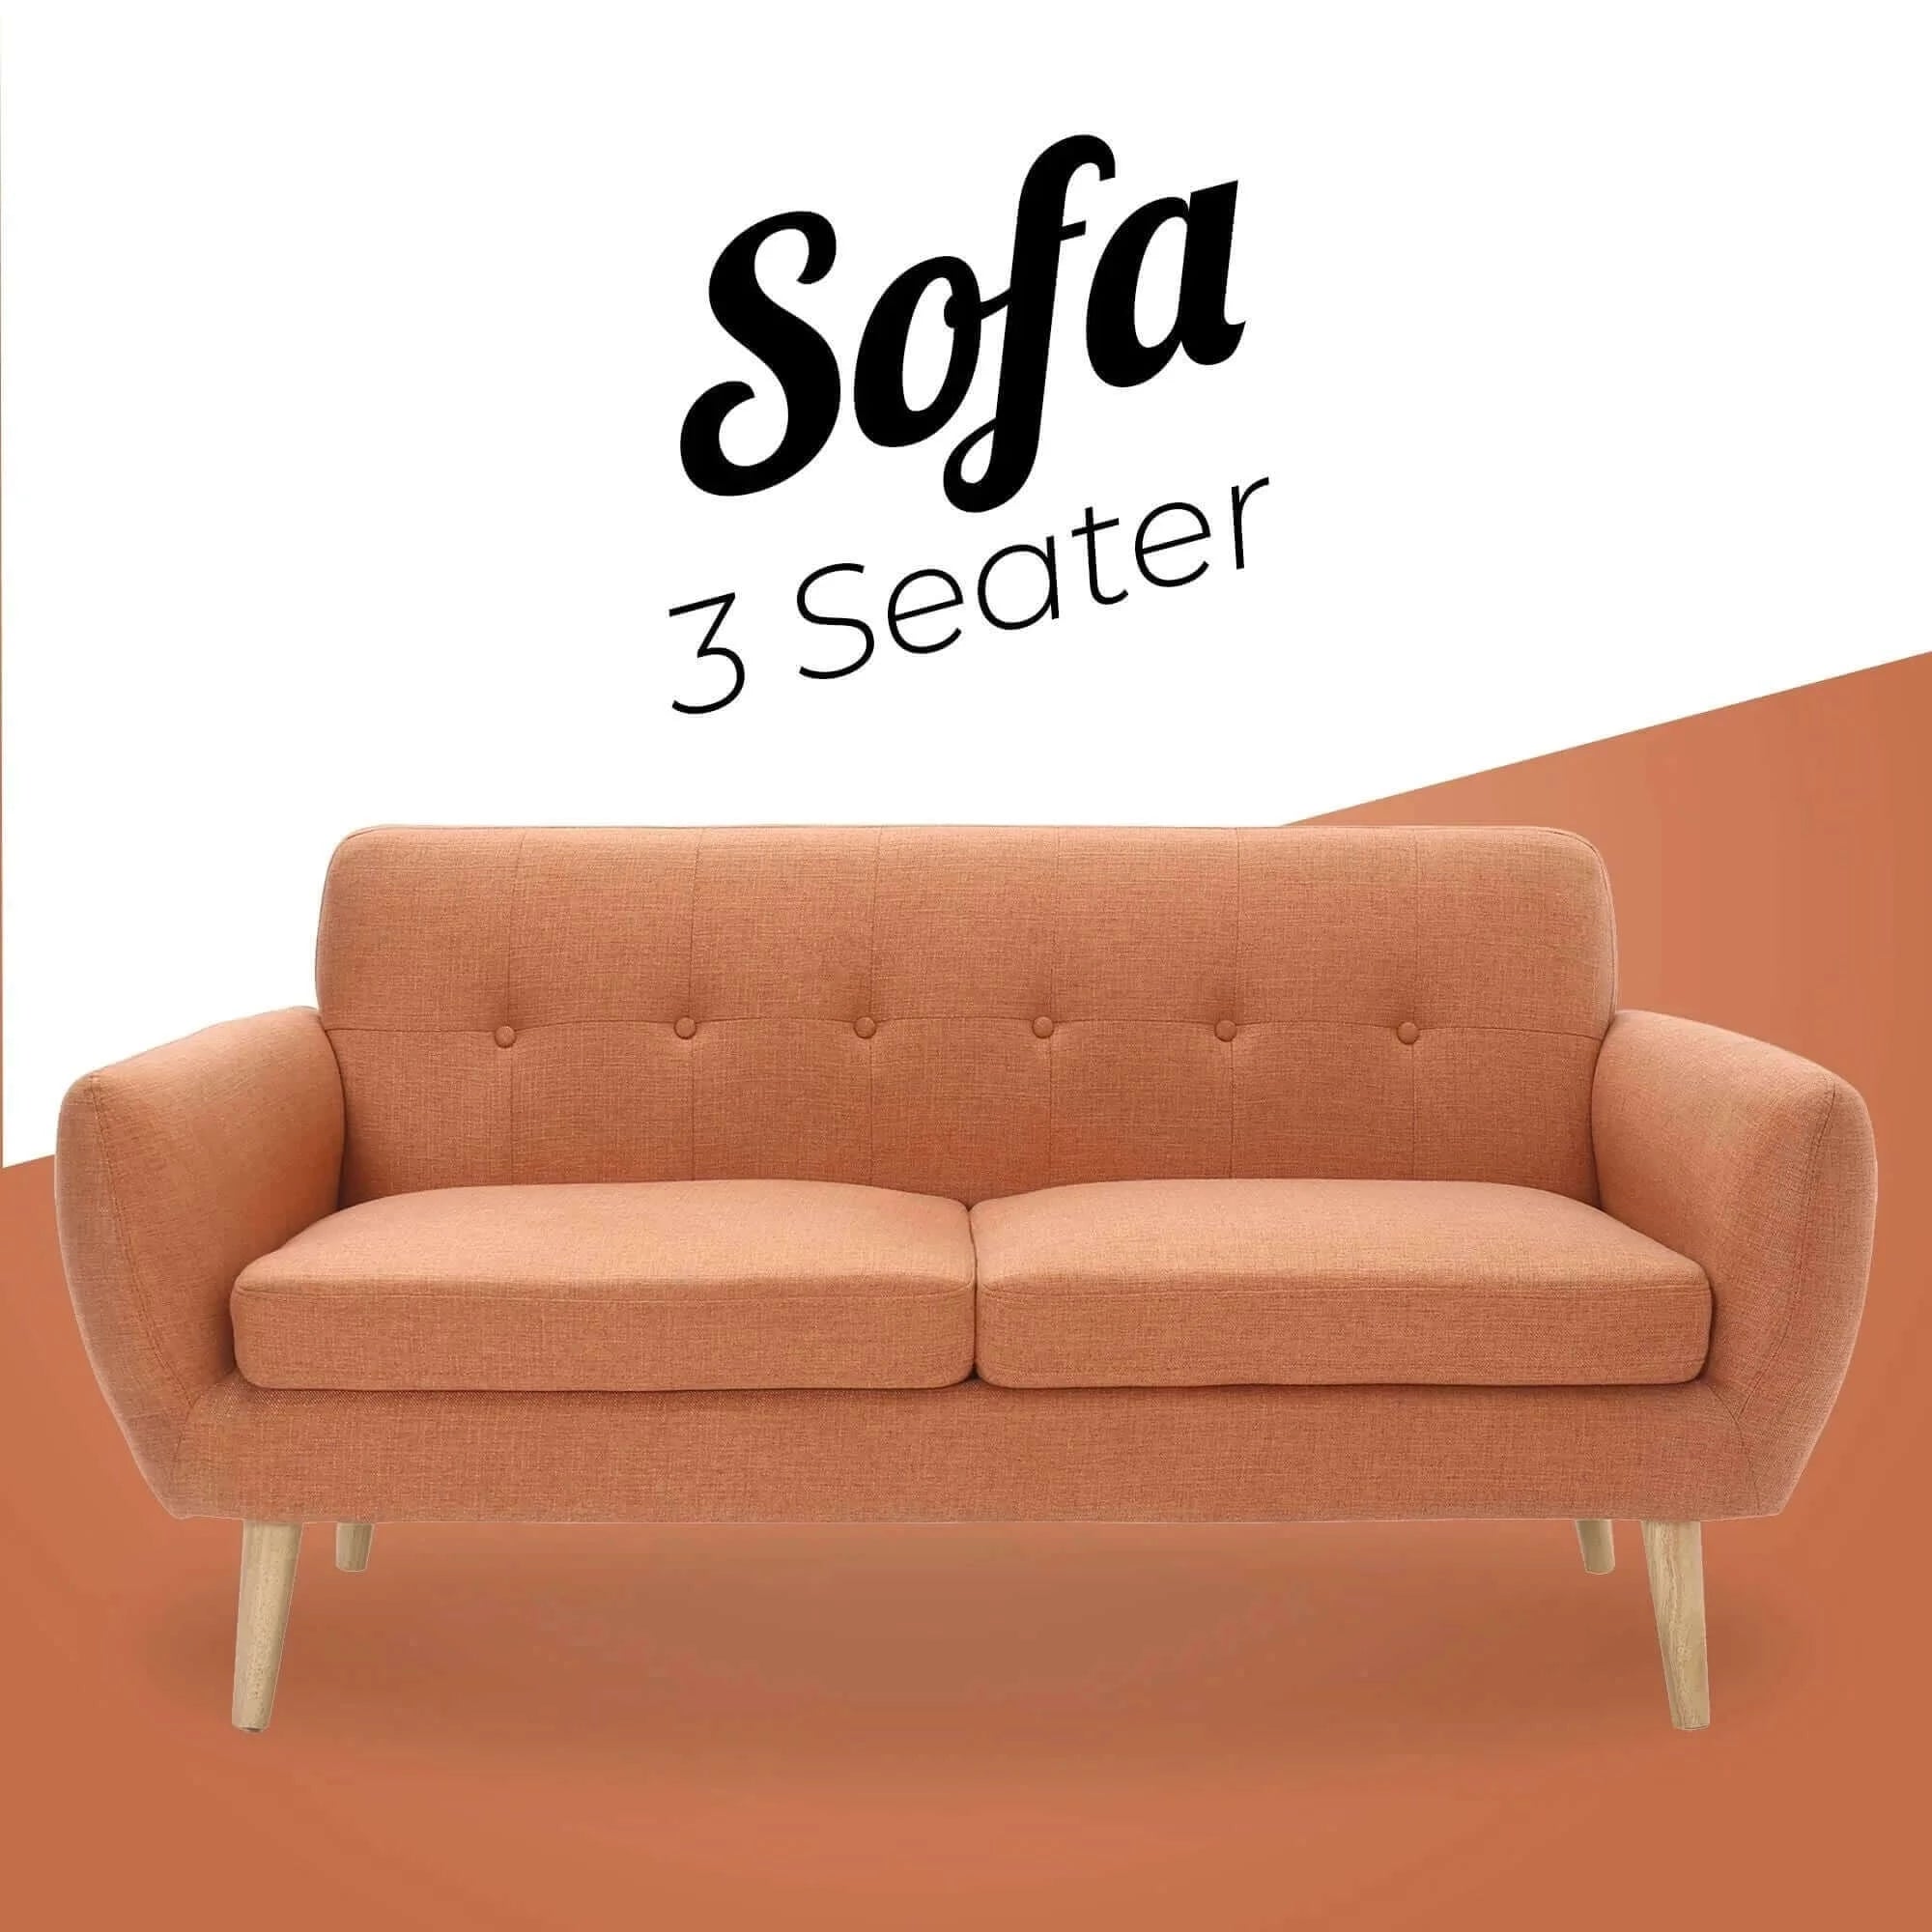 Buy Dane 3 Seater Fabric Upholstered Sofa Lounge Couch – Upinteriors-Upinteriors